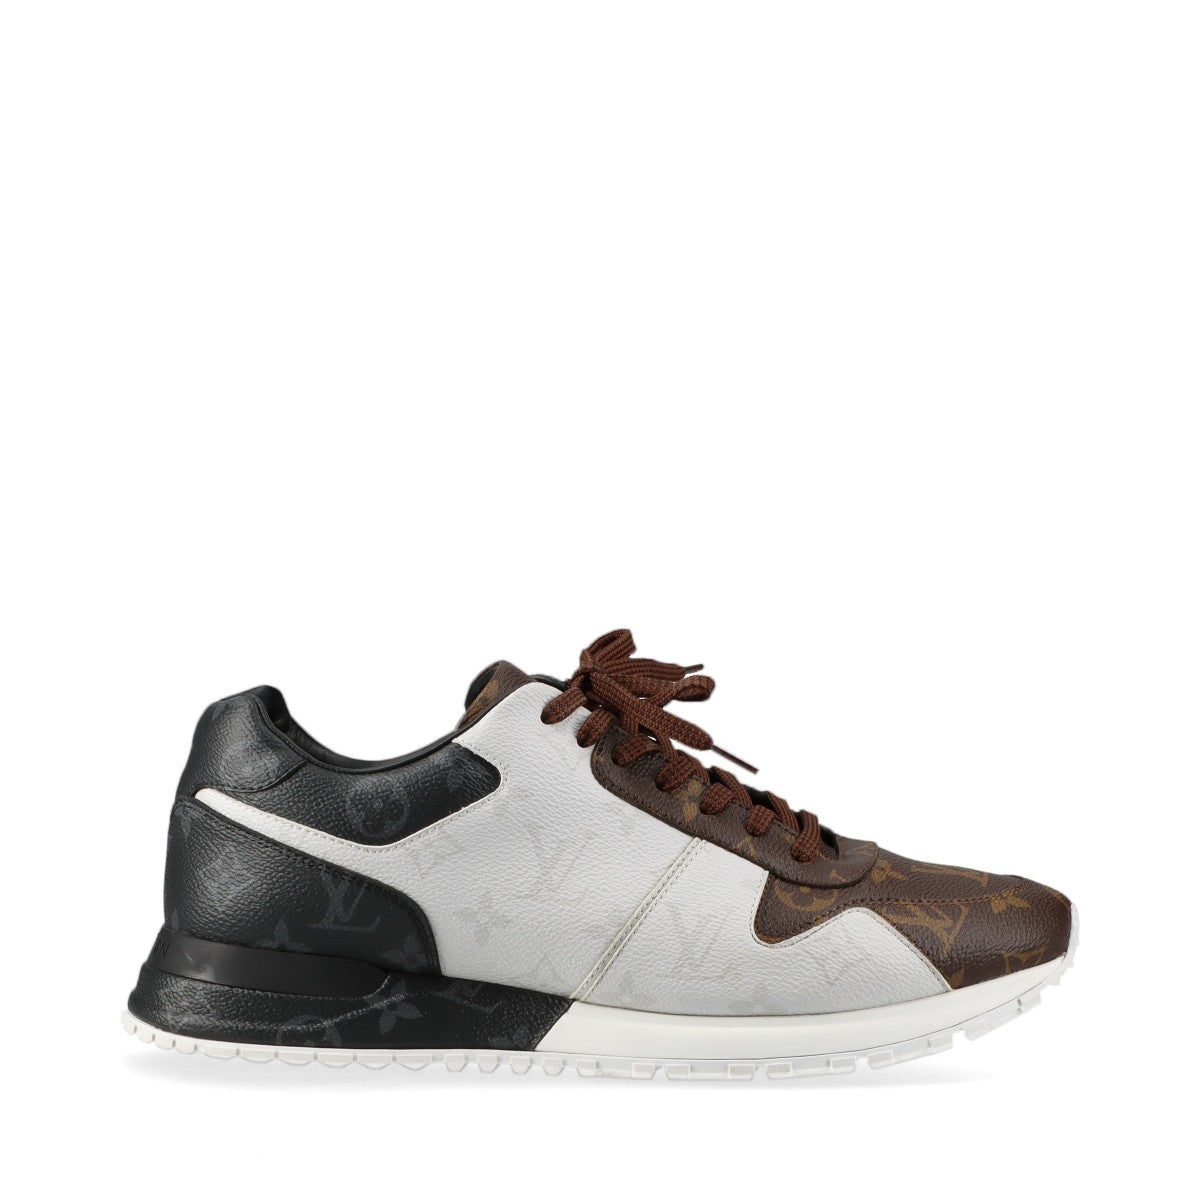 Louis Vuitton Runaway line 21 years Leather Sneakers 7.5 Men's Black x white x brown LD0231 Monogram